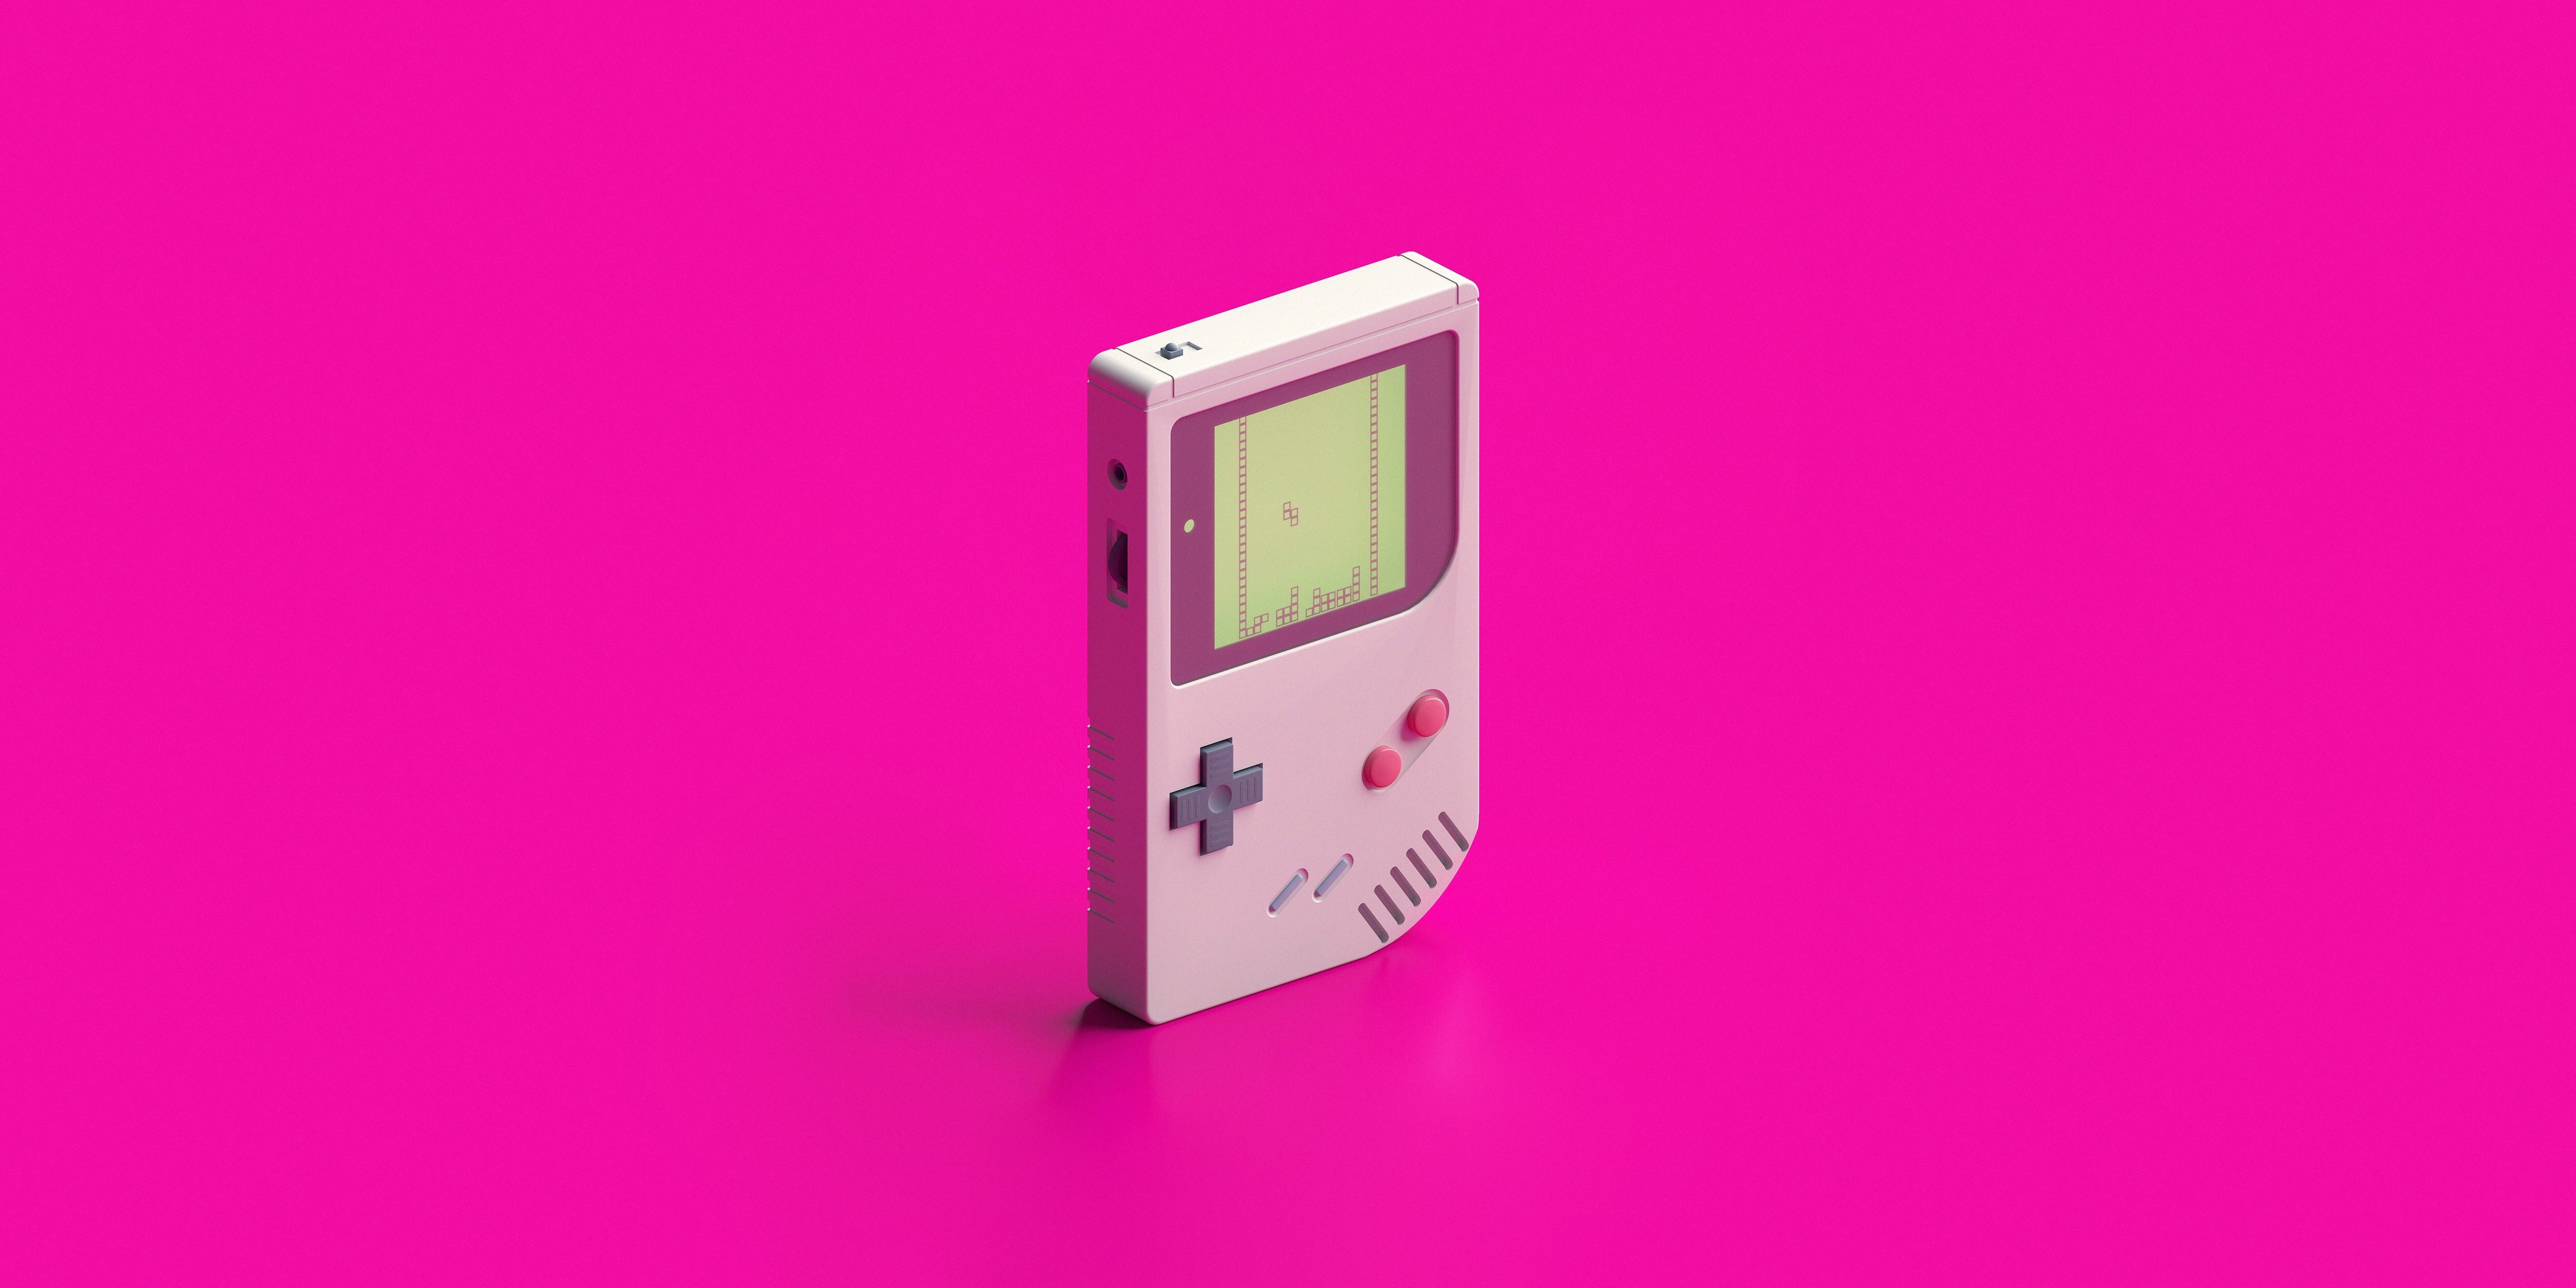 4K, GameBoy, LoFi, magenta, video games, synthwave, simple background, pink, Nintendo, pink background, retro games Gallery HD Wallpaper